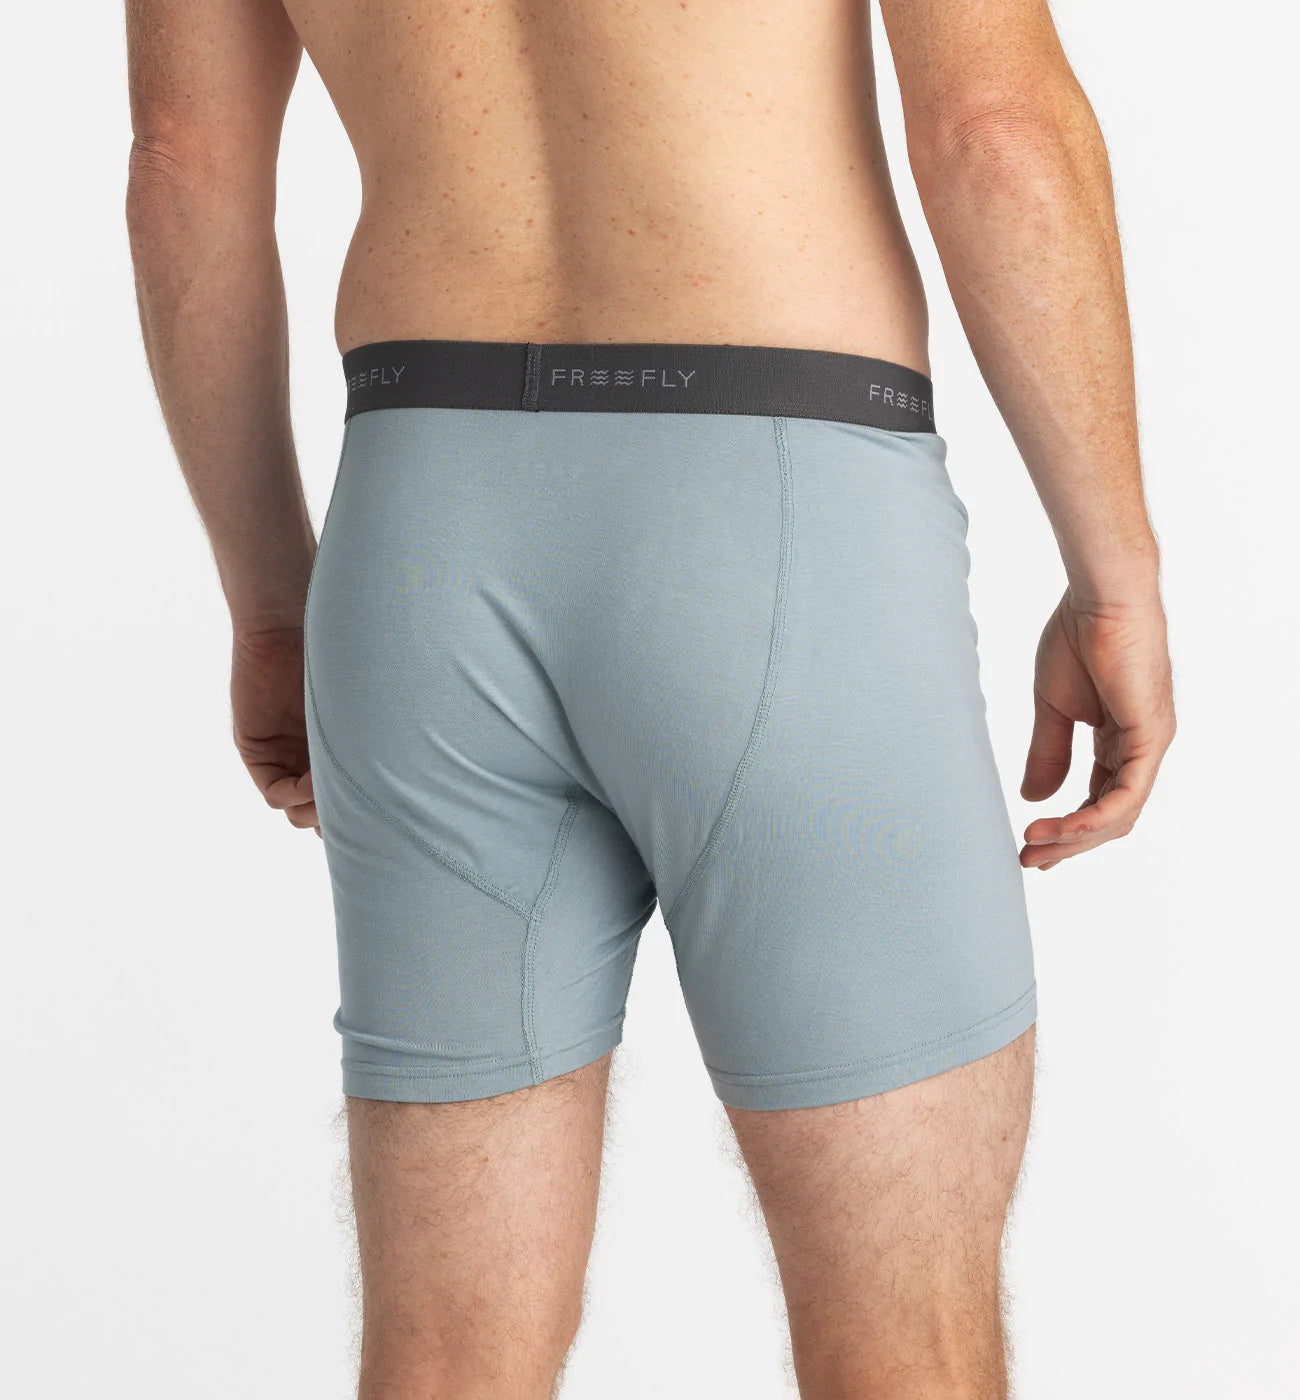 Men's Bamboo Boxer Briefs | Bamboo Underwear for Men – Free Fly Apparel